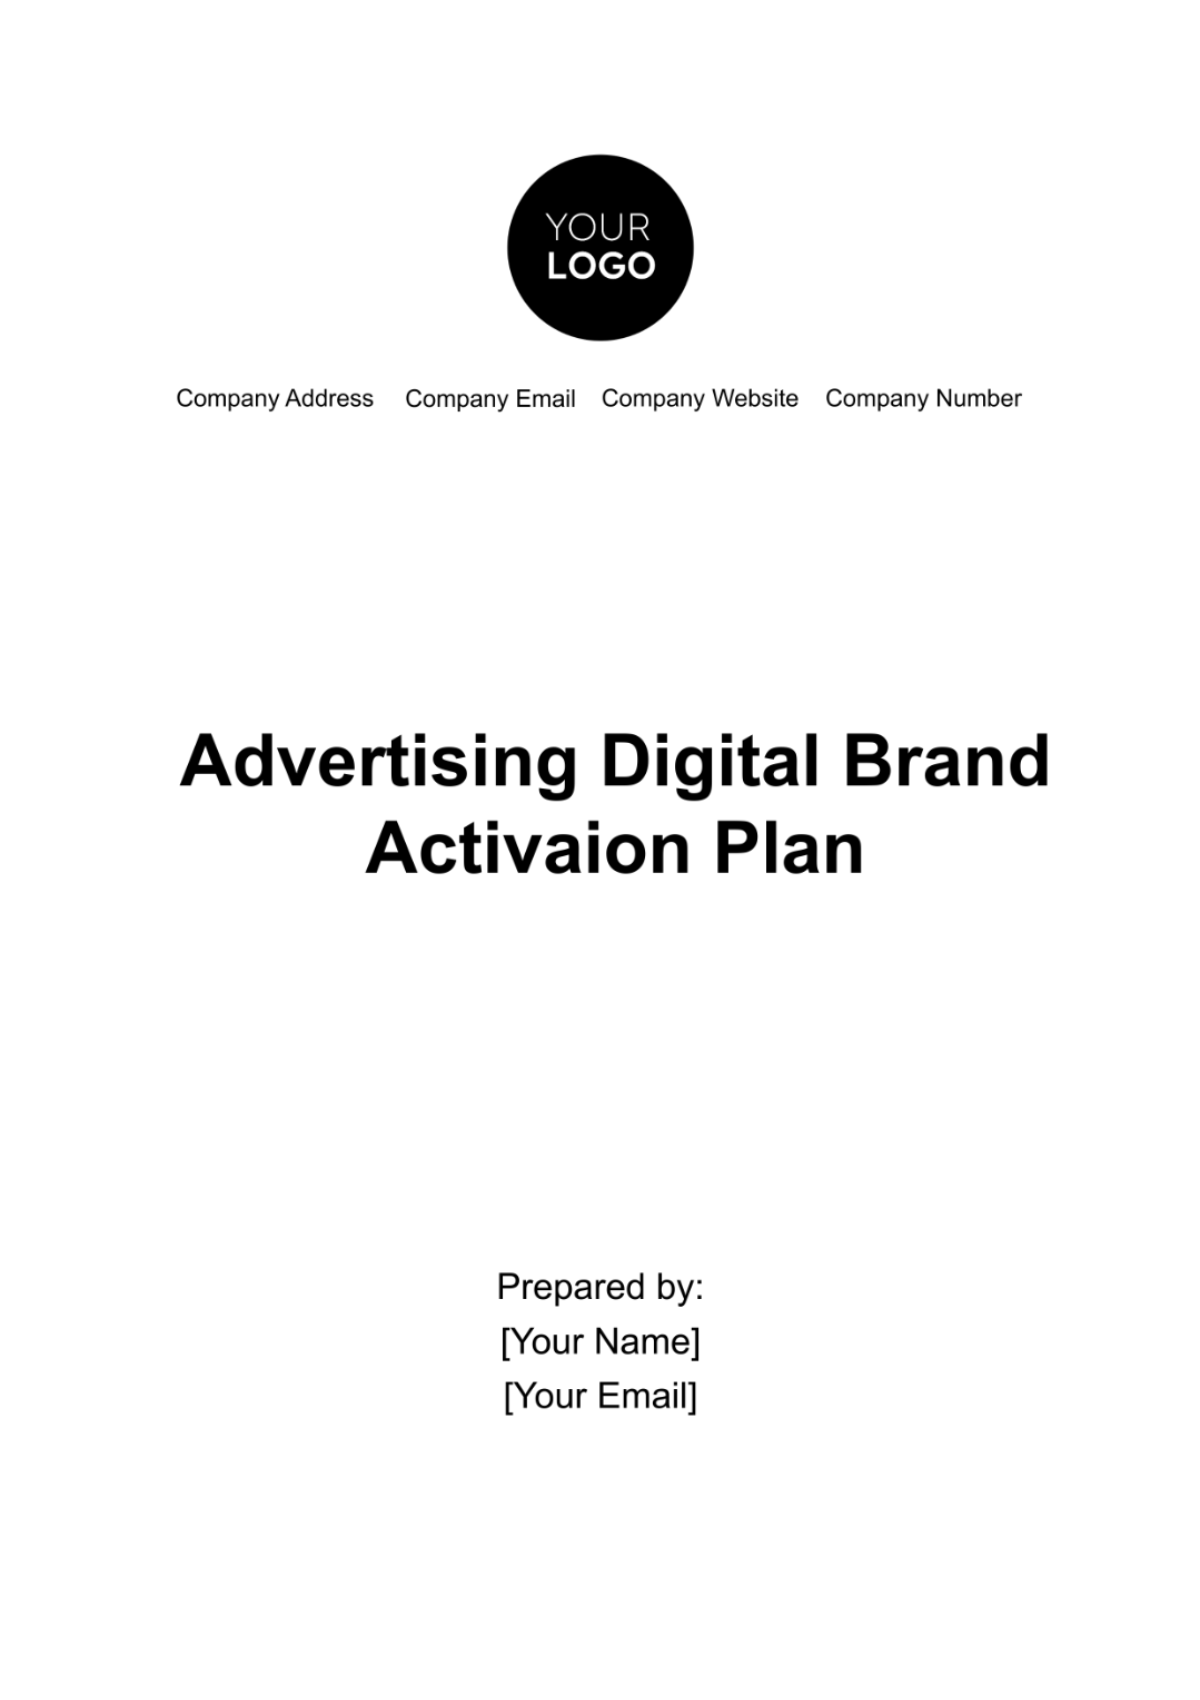 Advertising Digital Brand Activation Plan Template